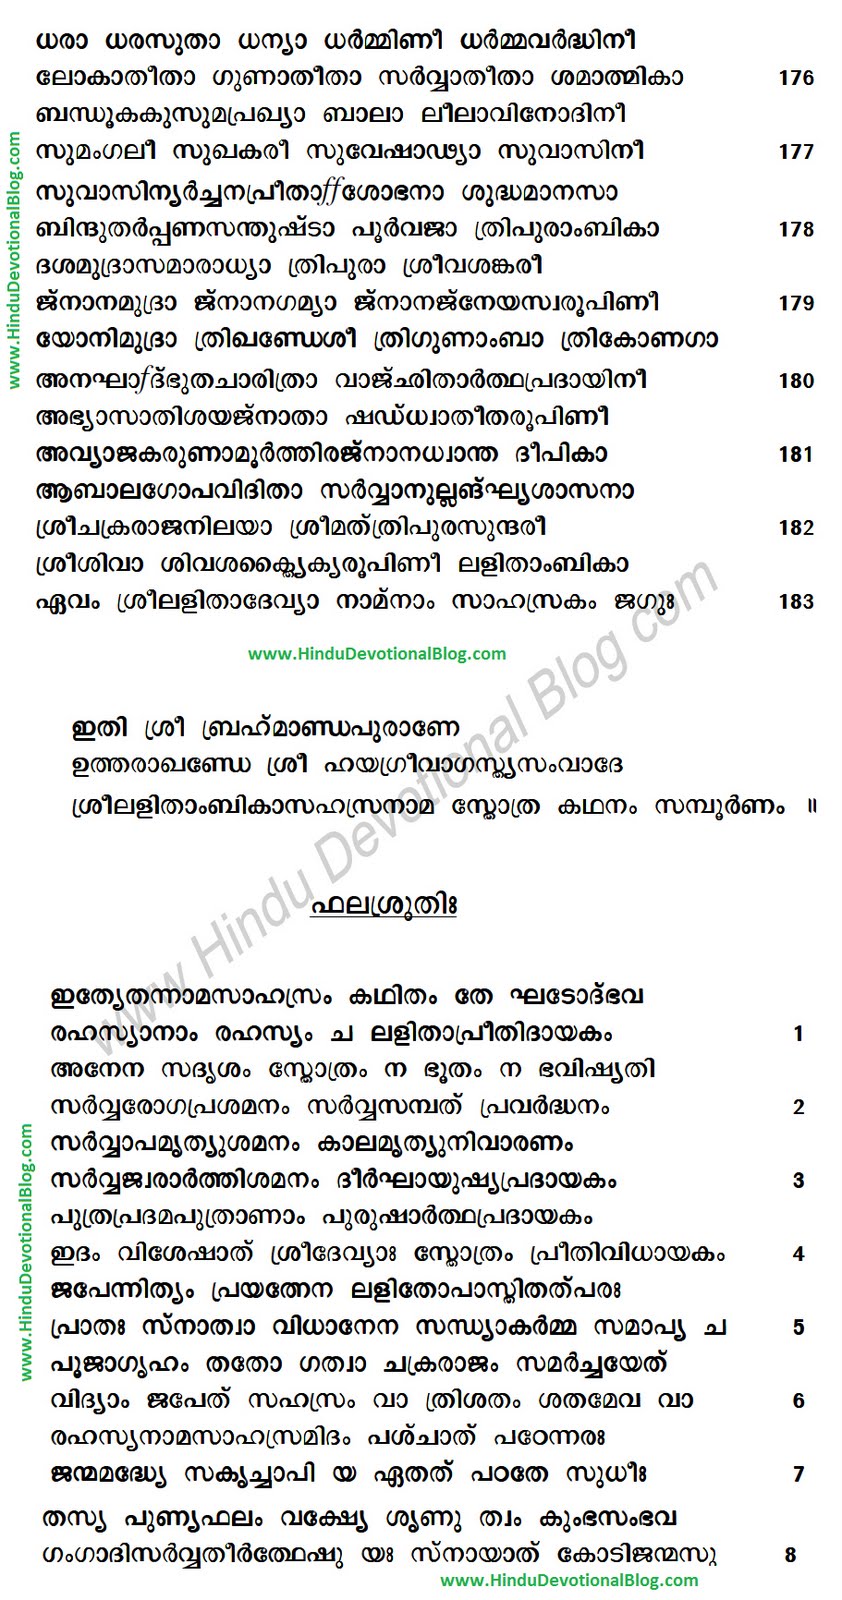 lalitha sahasranamam lyrics in malayalam